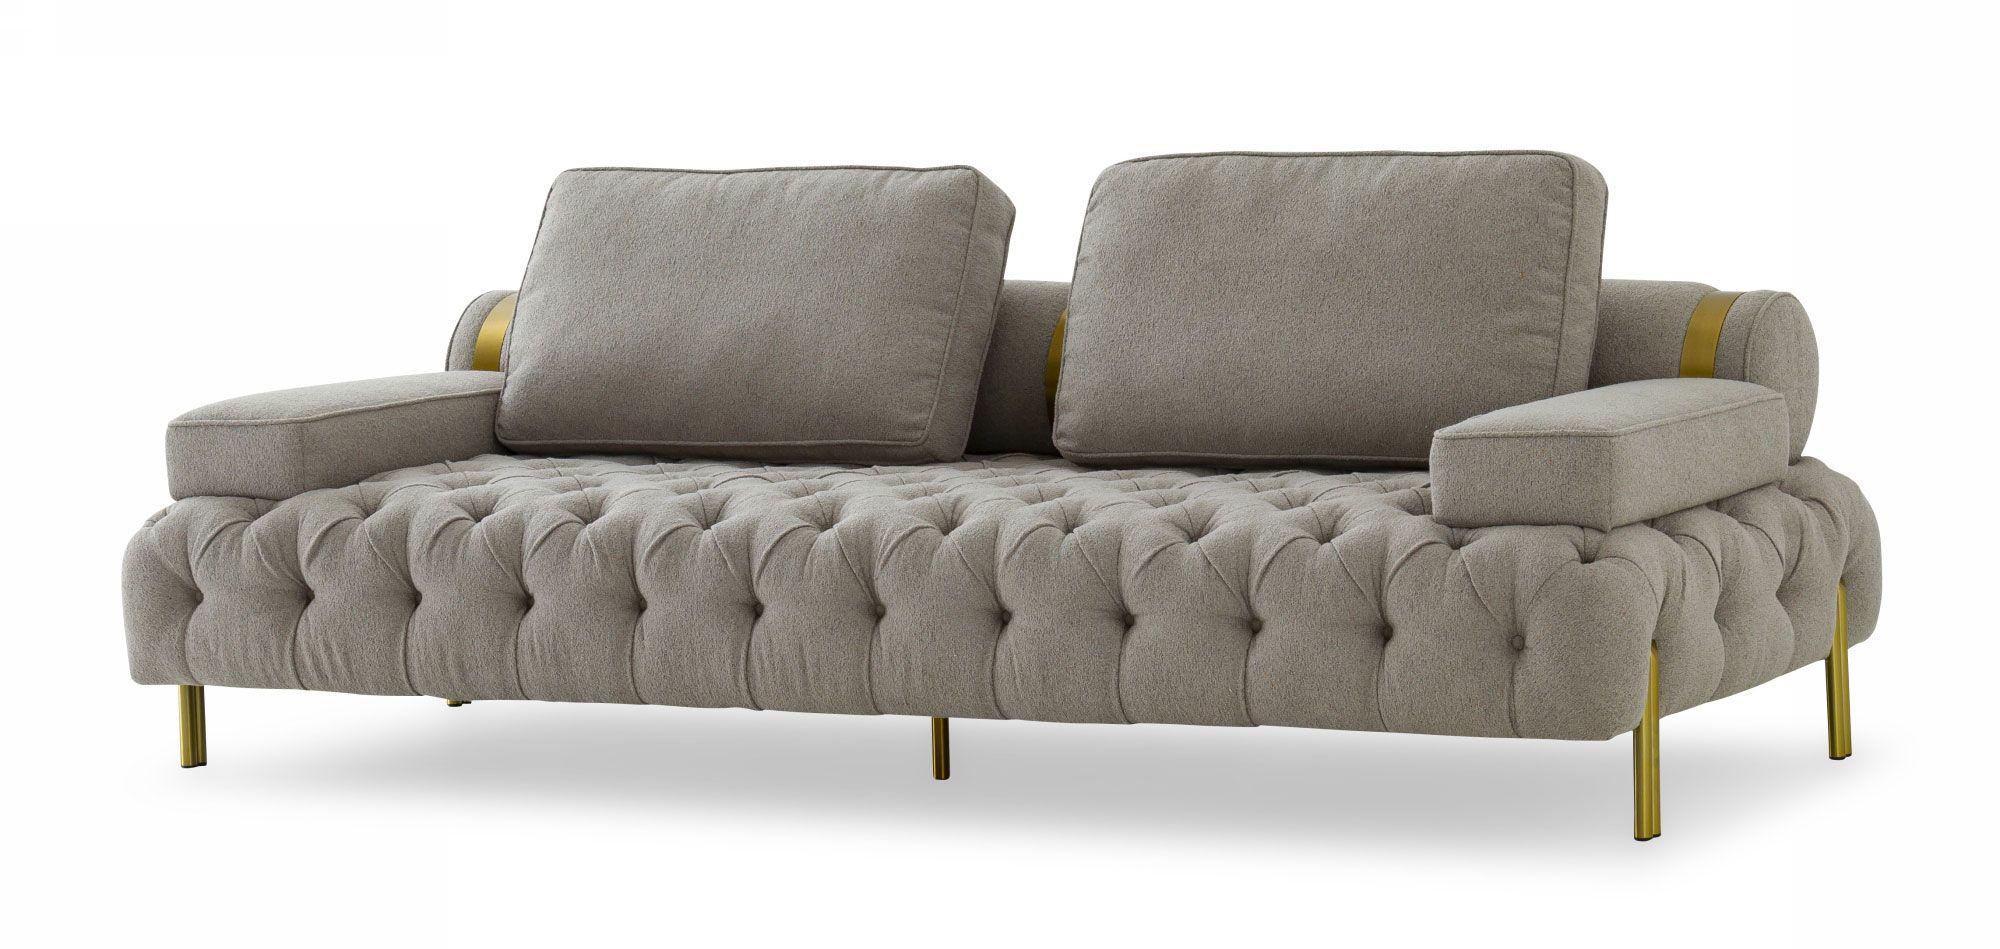 Contemporary, Modern Sofa VGODZW-9106 VGODZW-9106 in Gray, Gold Fabric